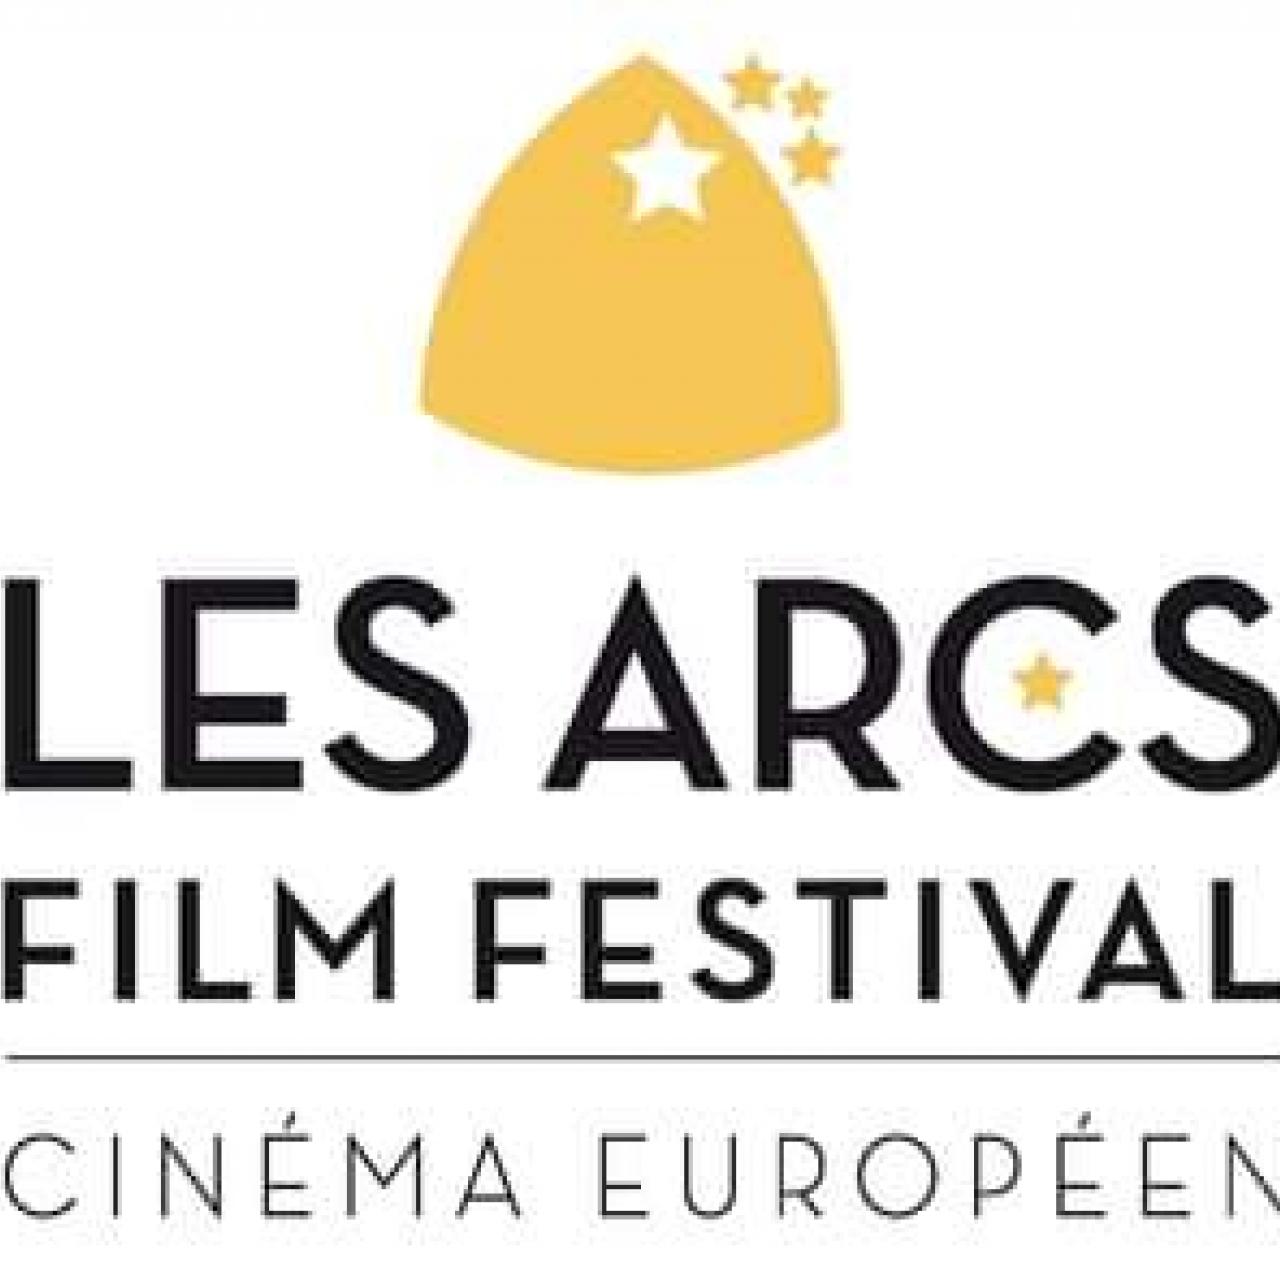 Logo Les Arcs film festival